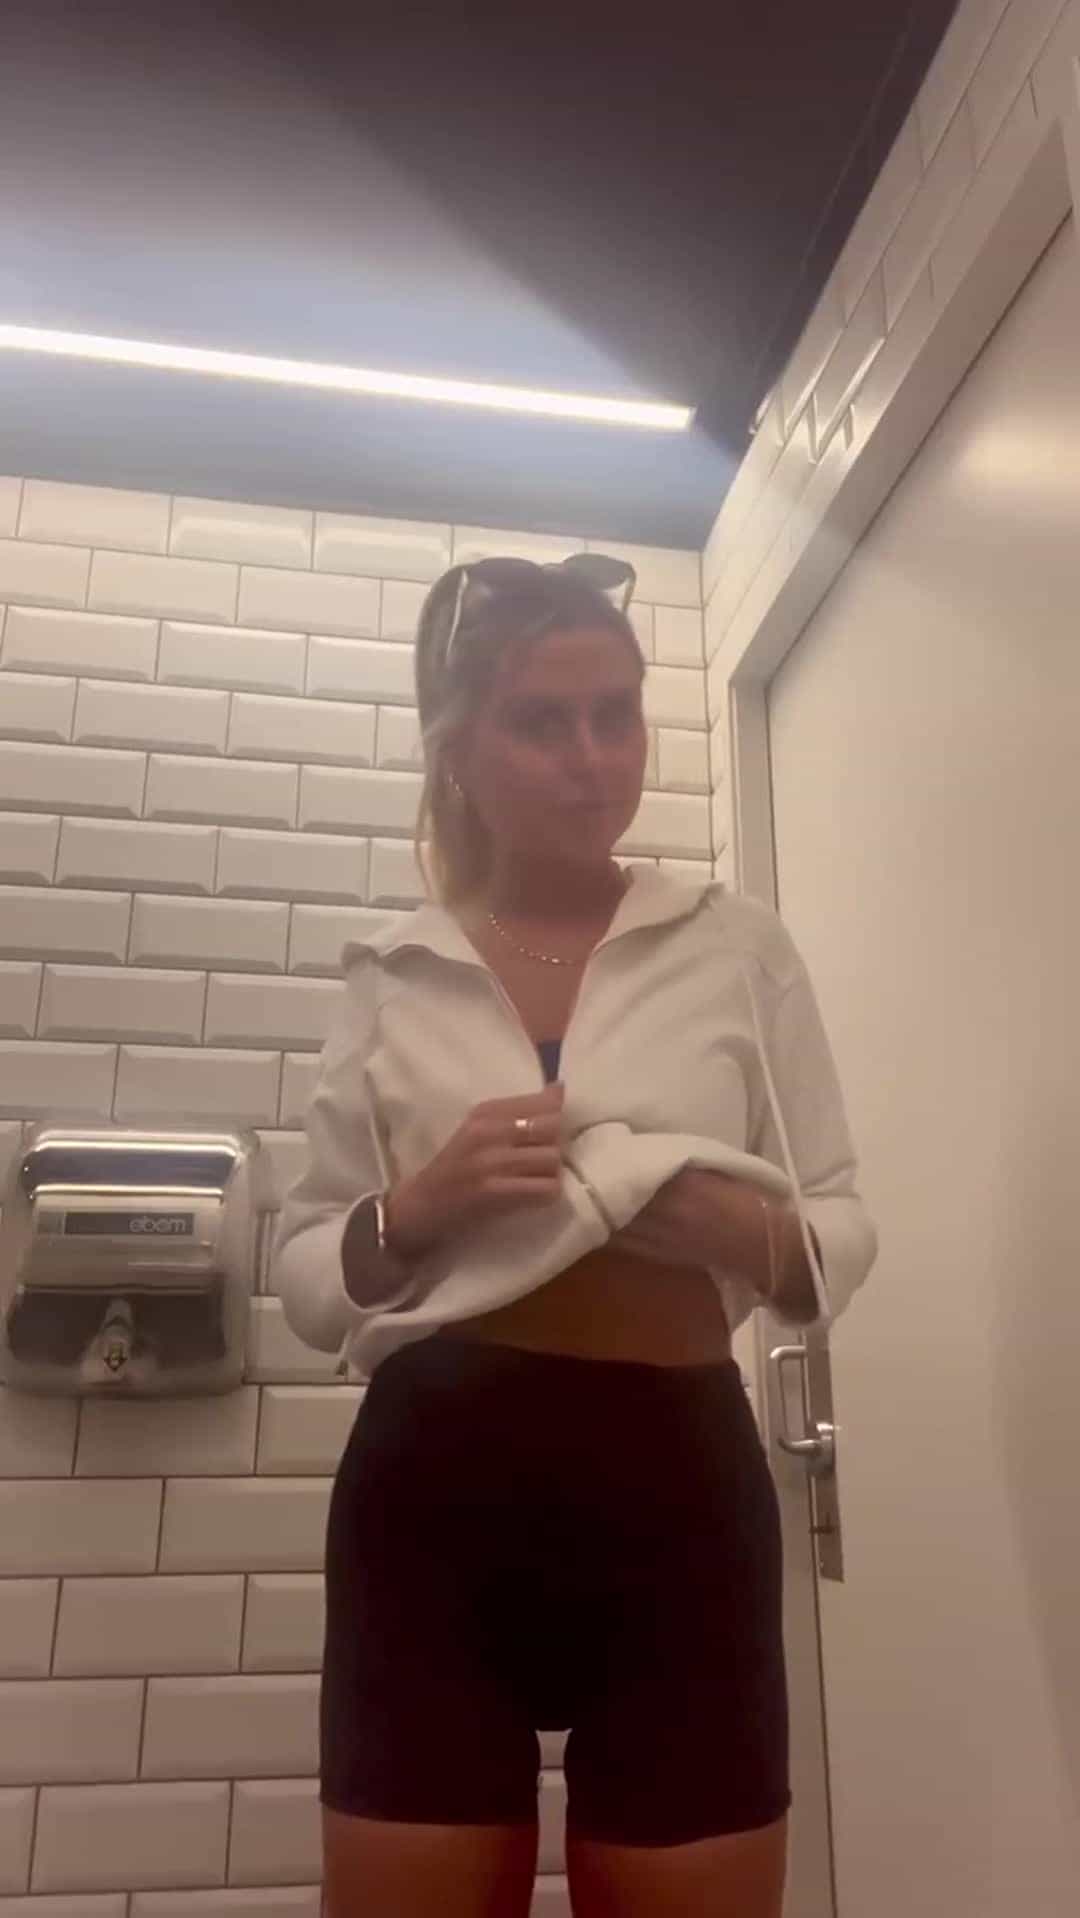 Public bathroom boner alert 🙈